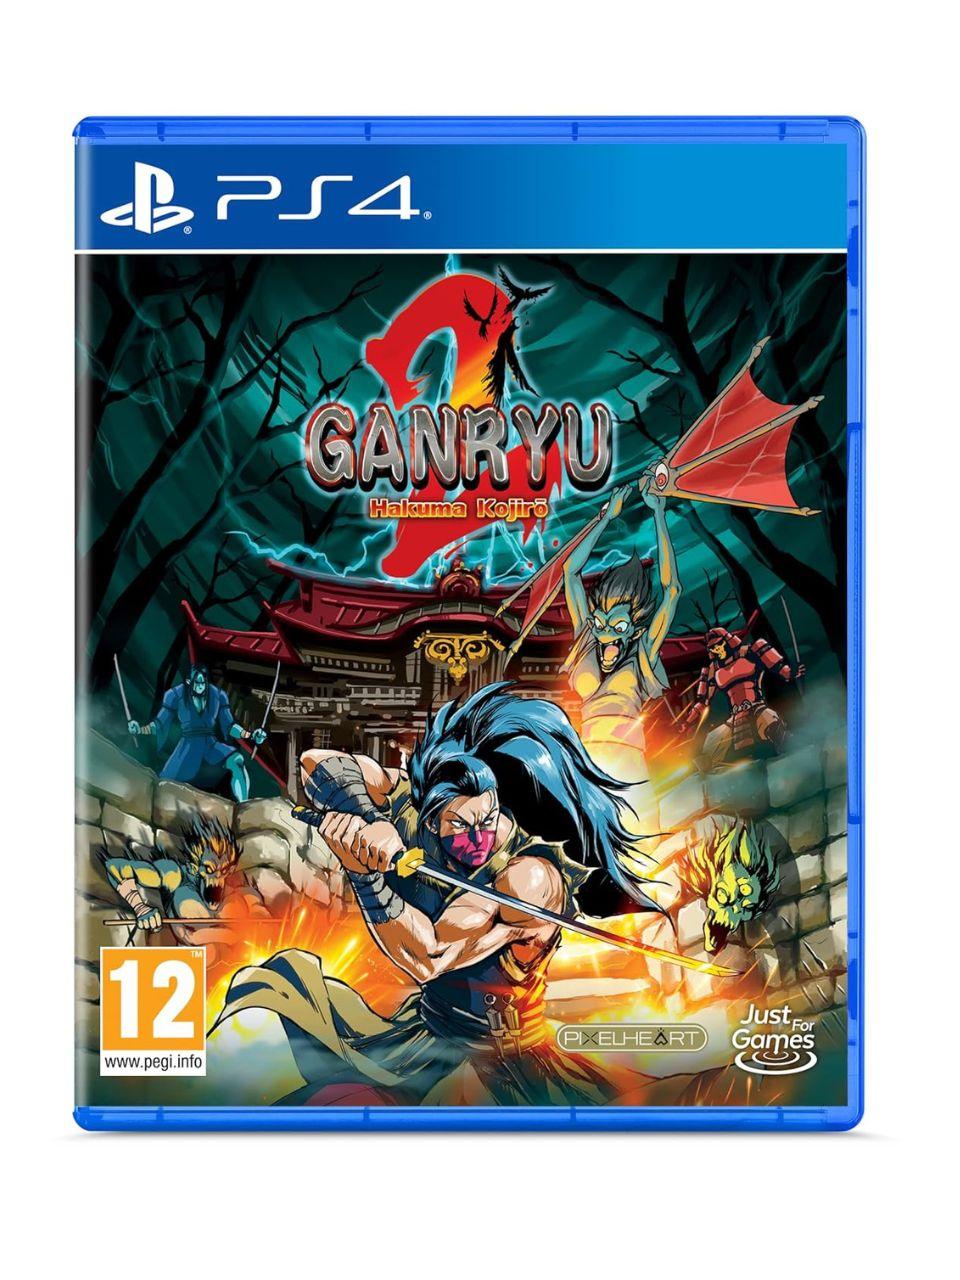 Ganryu 2 Hakuma Kojiro - PlayStation 4/PS4